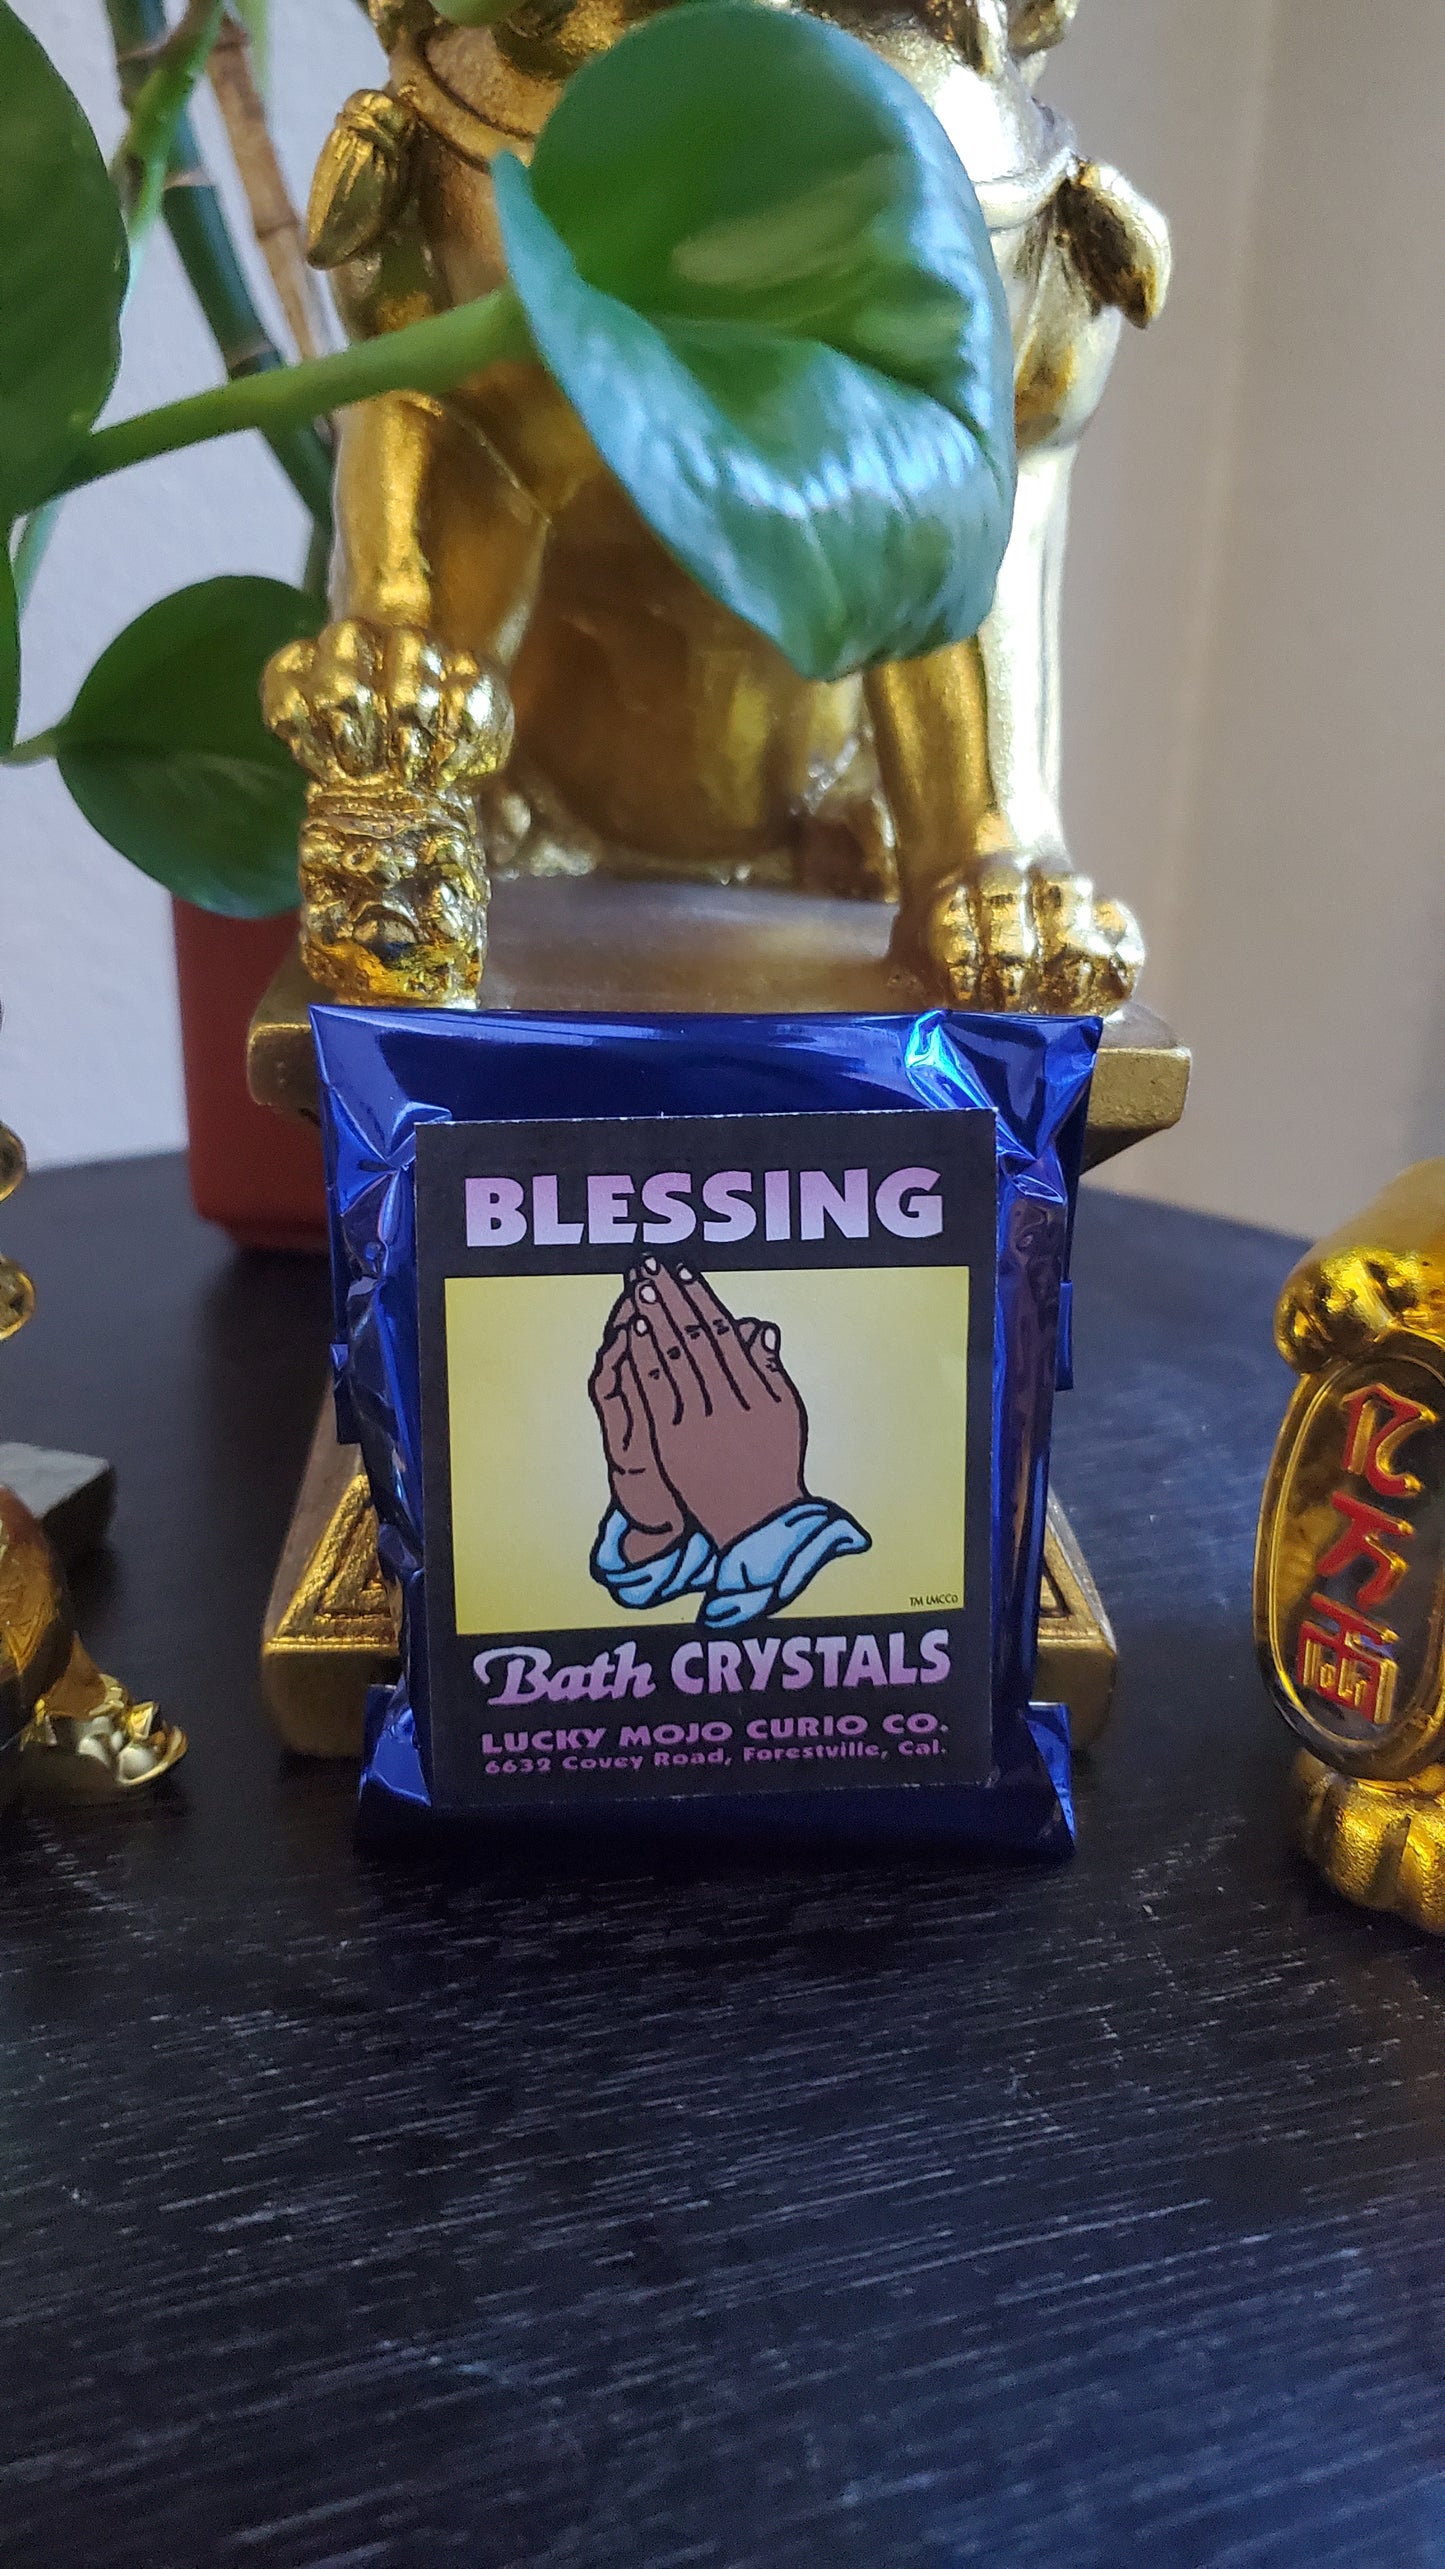 LuckyMojoCurioCo "Blessing" Bath Crystals #Great Deal #BathCrystal #SpiritBath #CleansingRituals #RitualMagick #LuckMagick